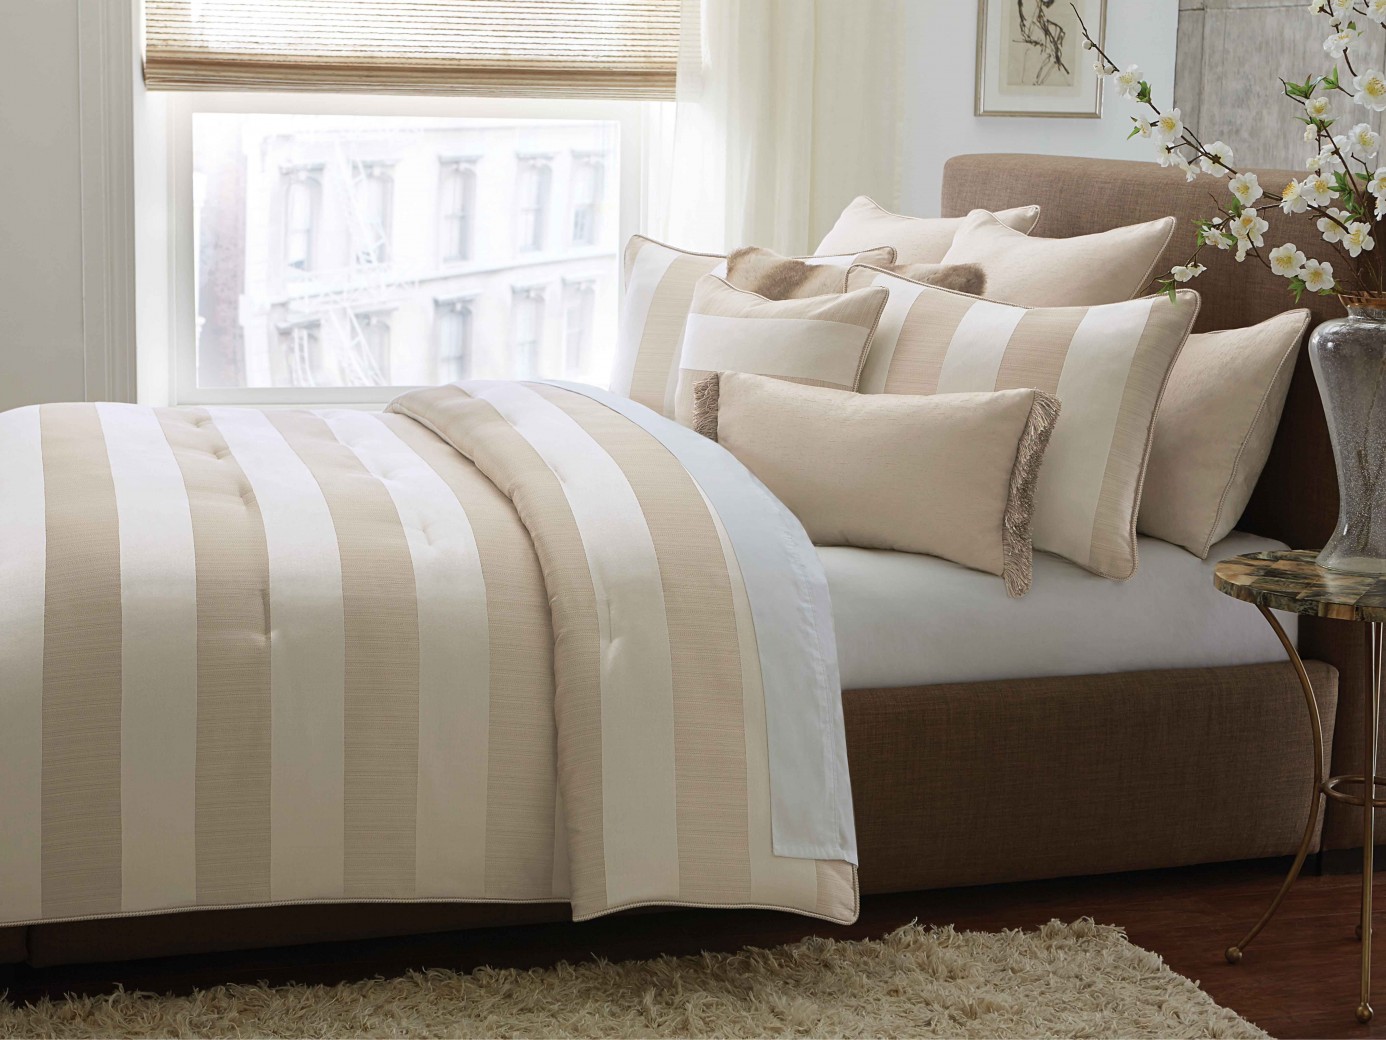  Michael Amini Amalfi Comforter Bedding Set by Aico